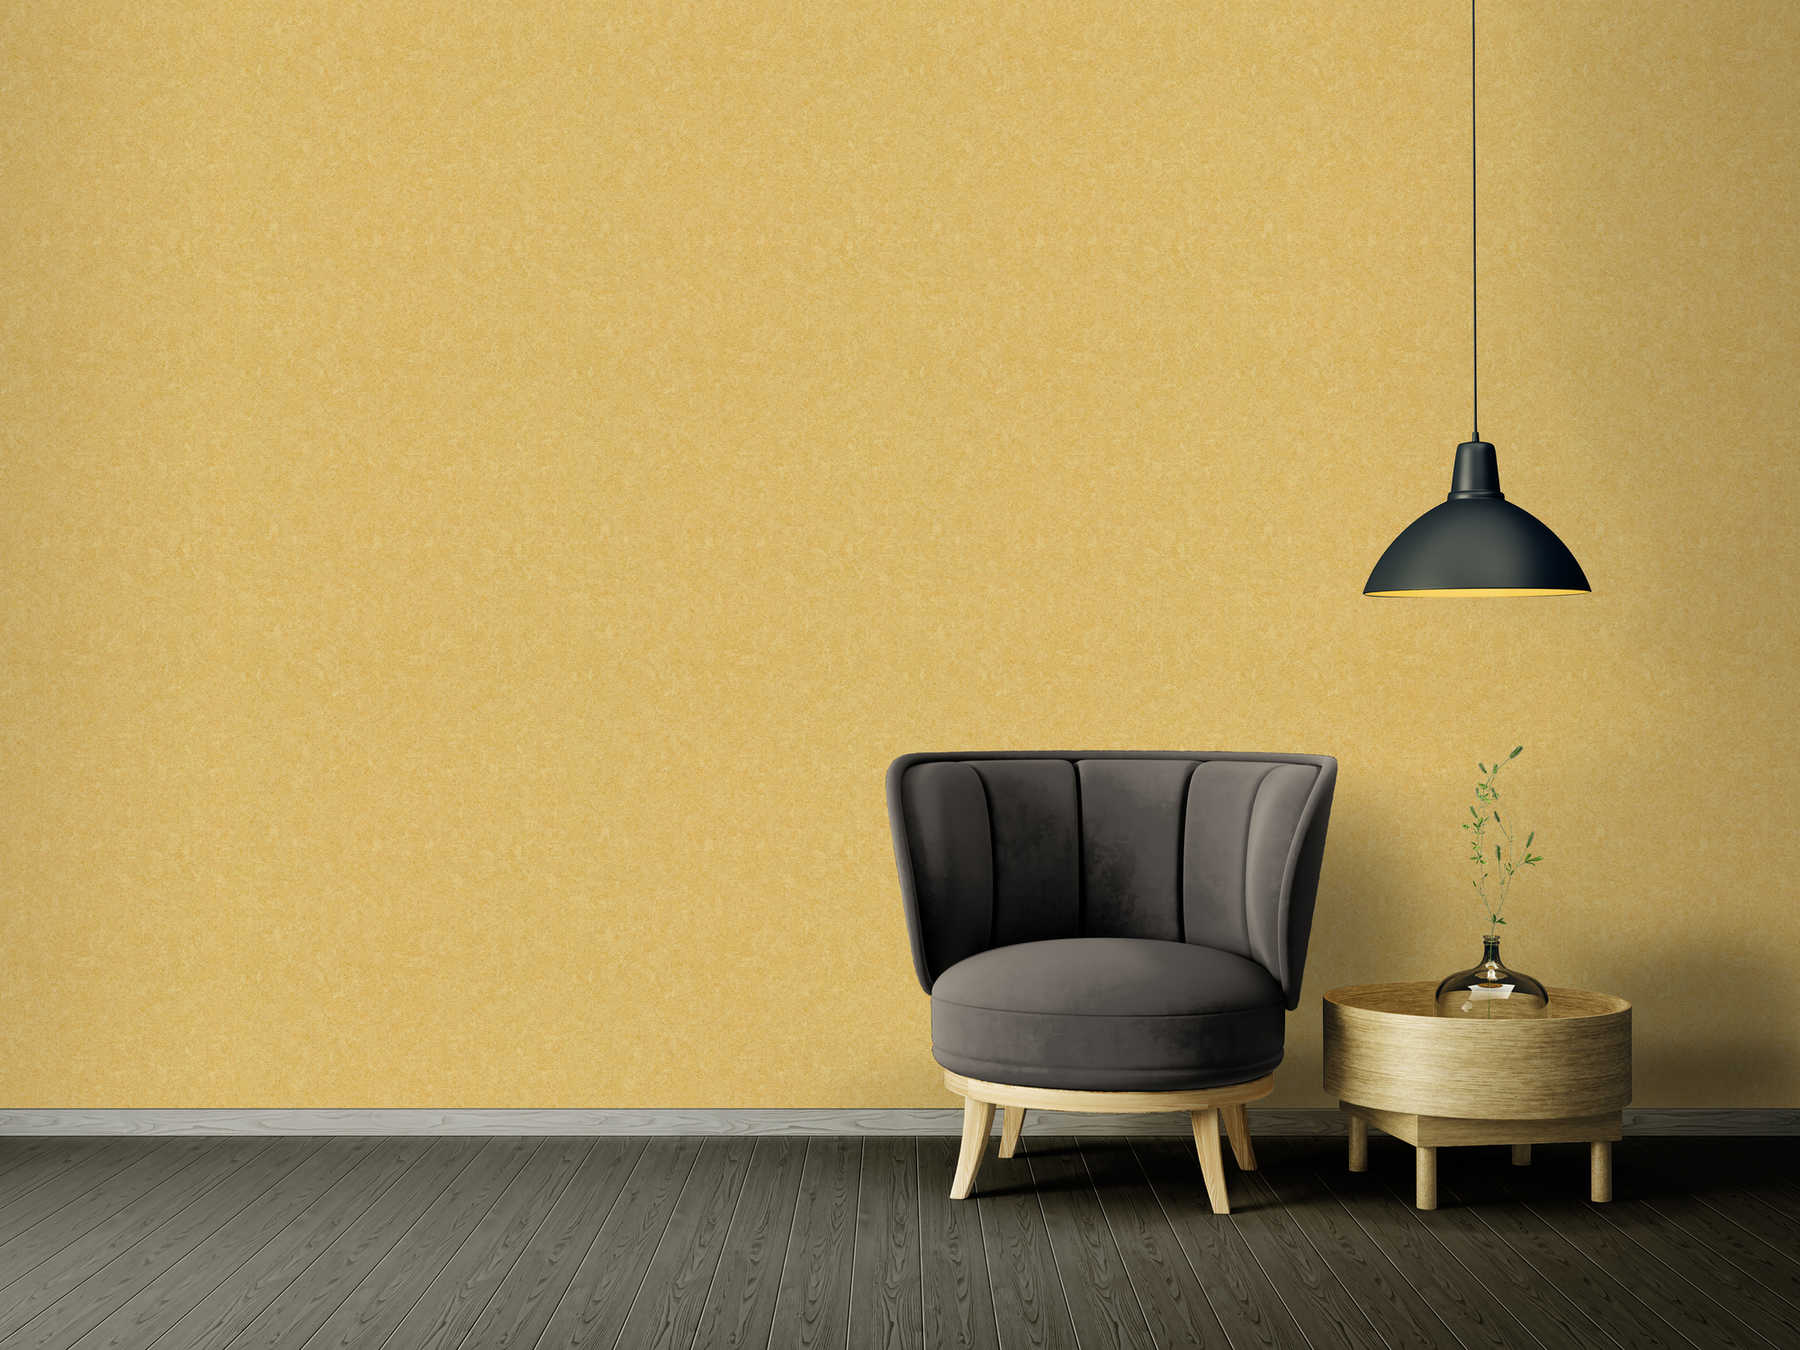             Golden VERSACE plain wallpaper with fine structure - gold
        